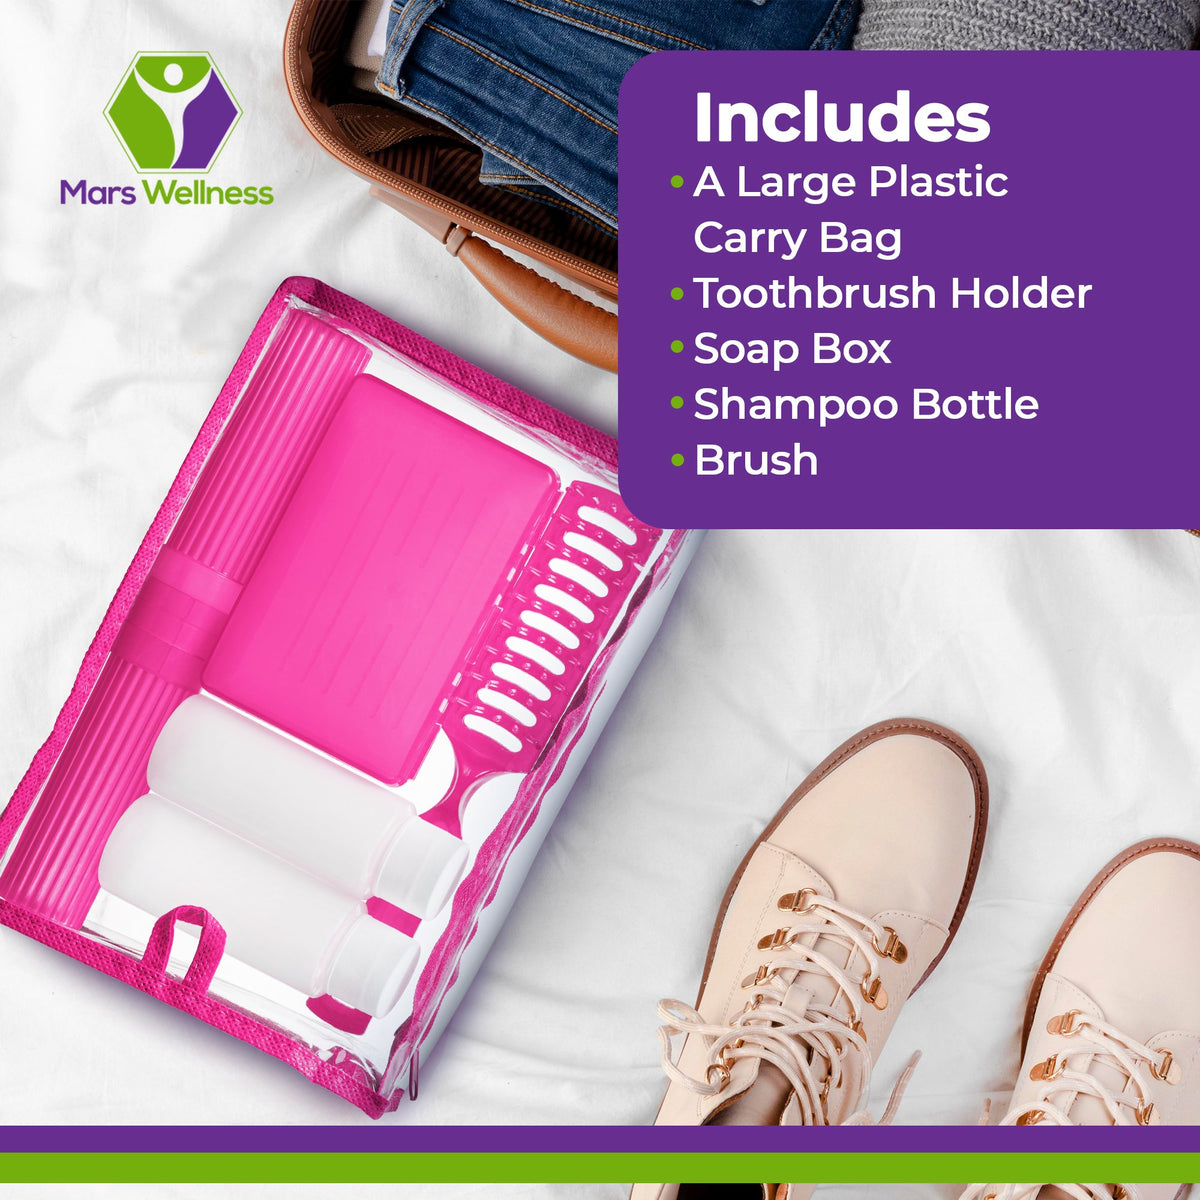 Mars Wellness Camp Kit - Travel Toiletry Kit w/ Plastic Carry Bag, Toothbrush Holder, Shampoo Bottle - Travel Accessories for Airplane, Camping, & More - Travel Kit for Women, Men & Kids